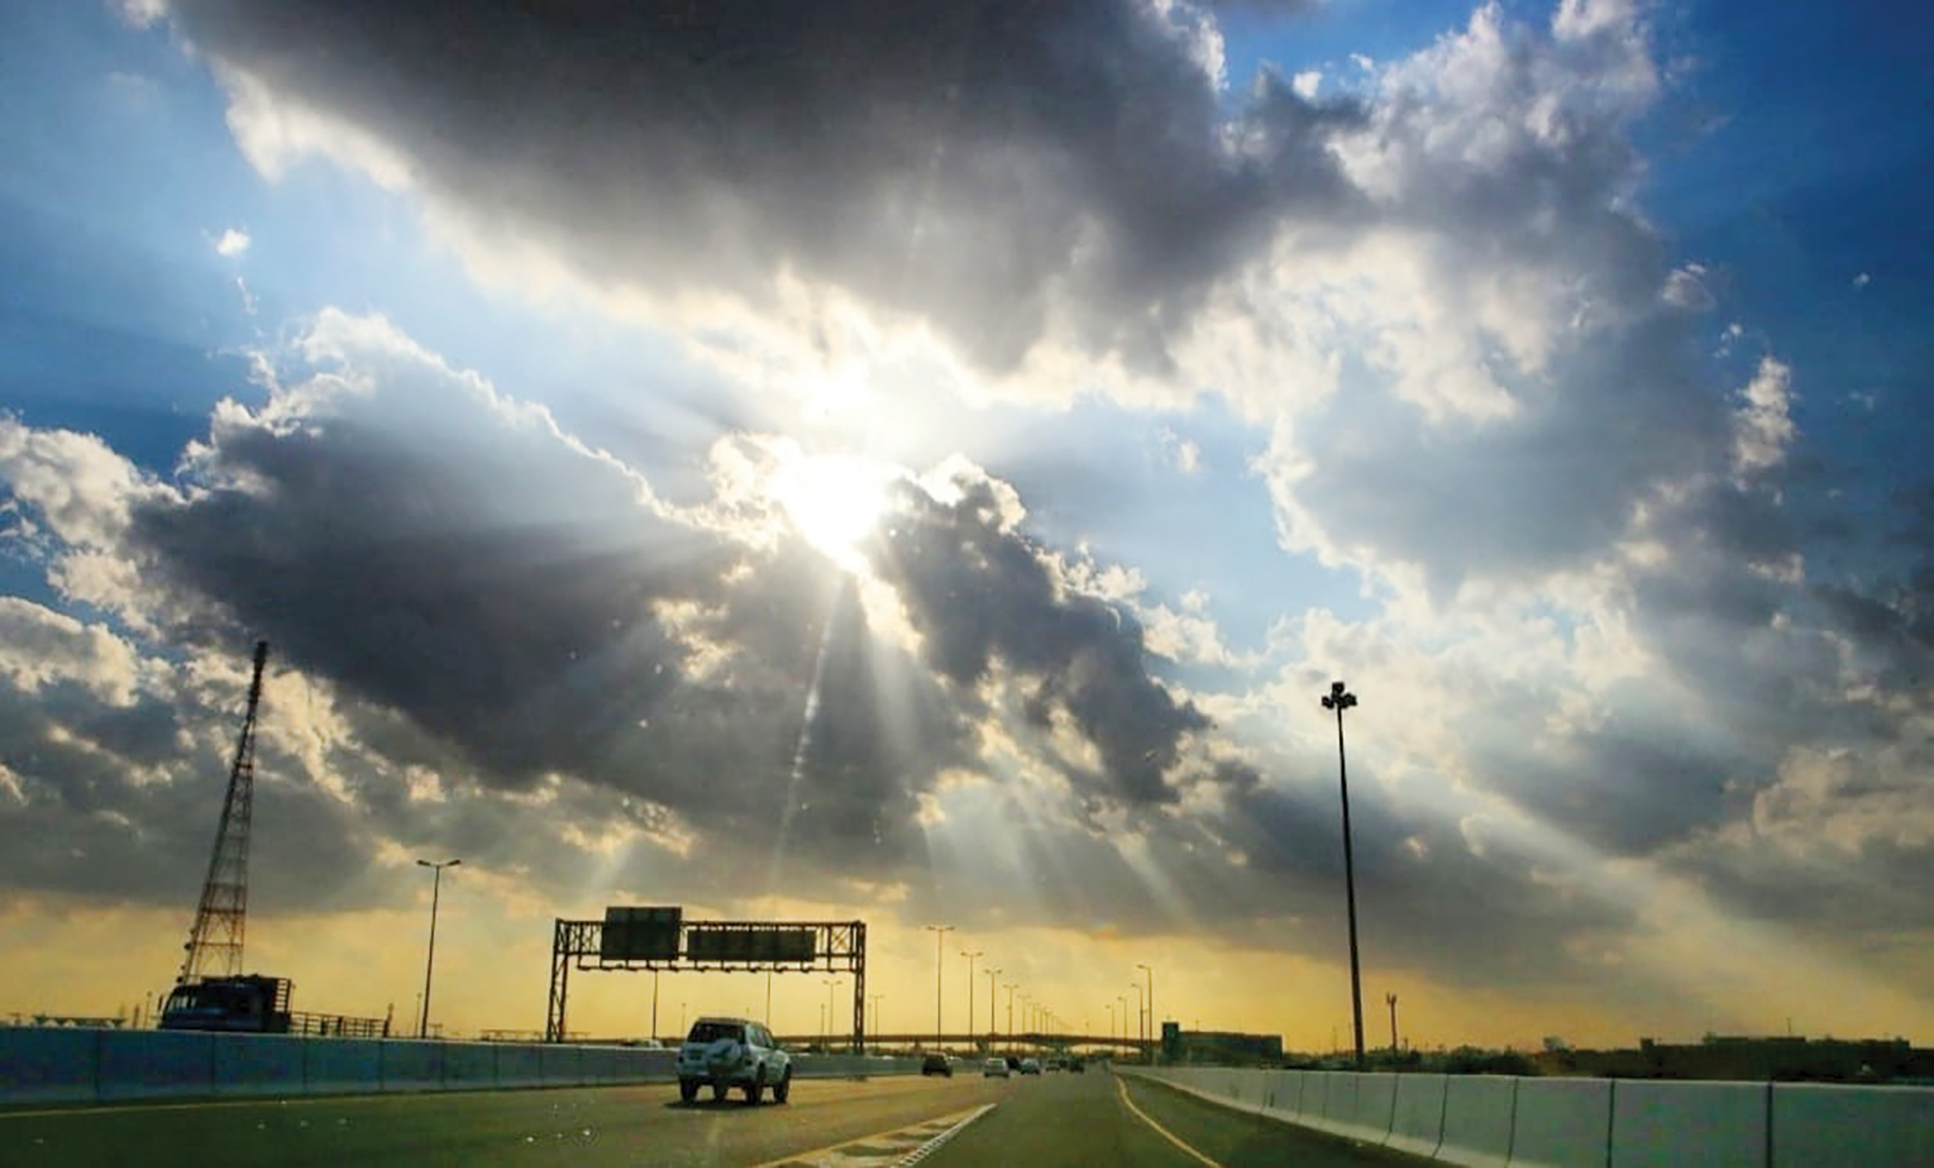 KUWAIT: The sun sets behind the clouds in Kuwait on Monday. — Photo by Yasser Al-Zayyat